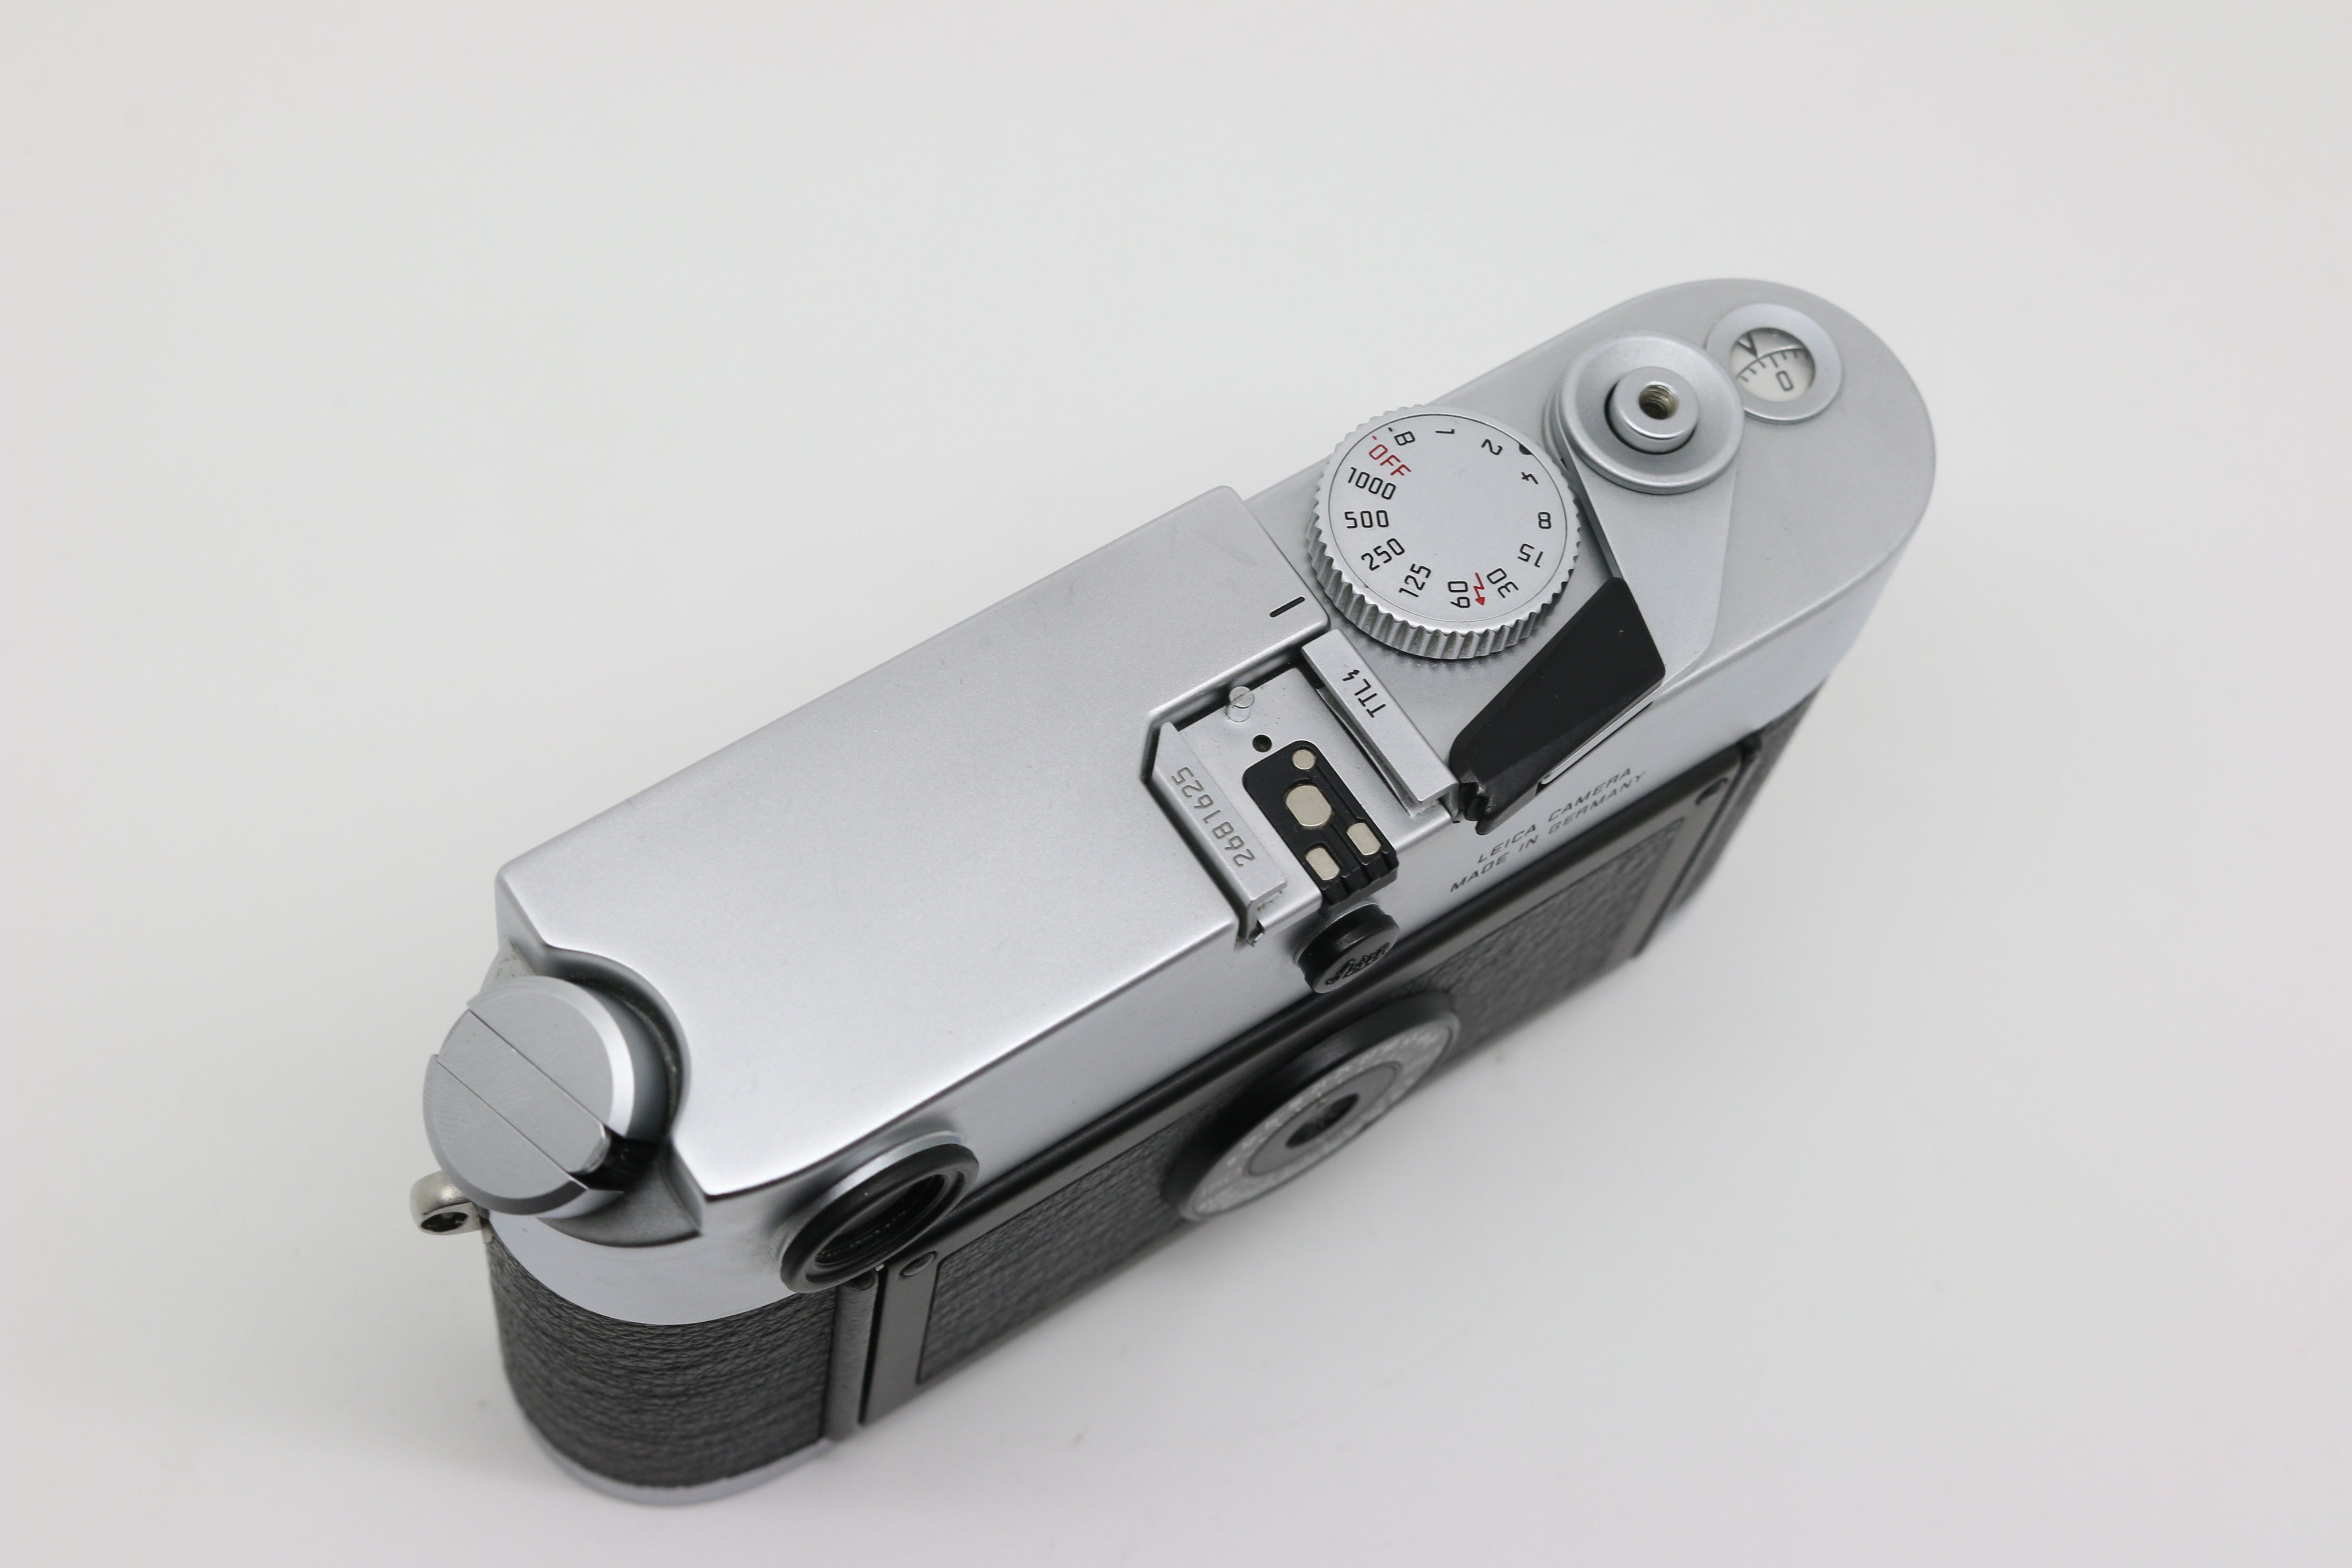 Leica M6 0.72 TTL Silver